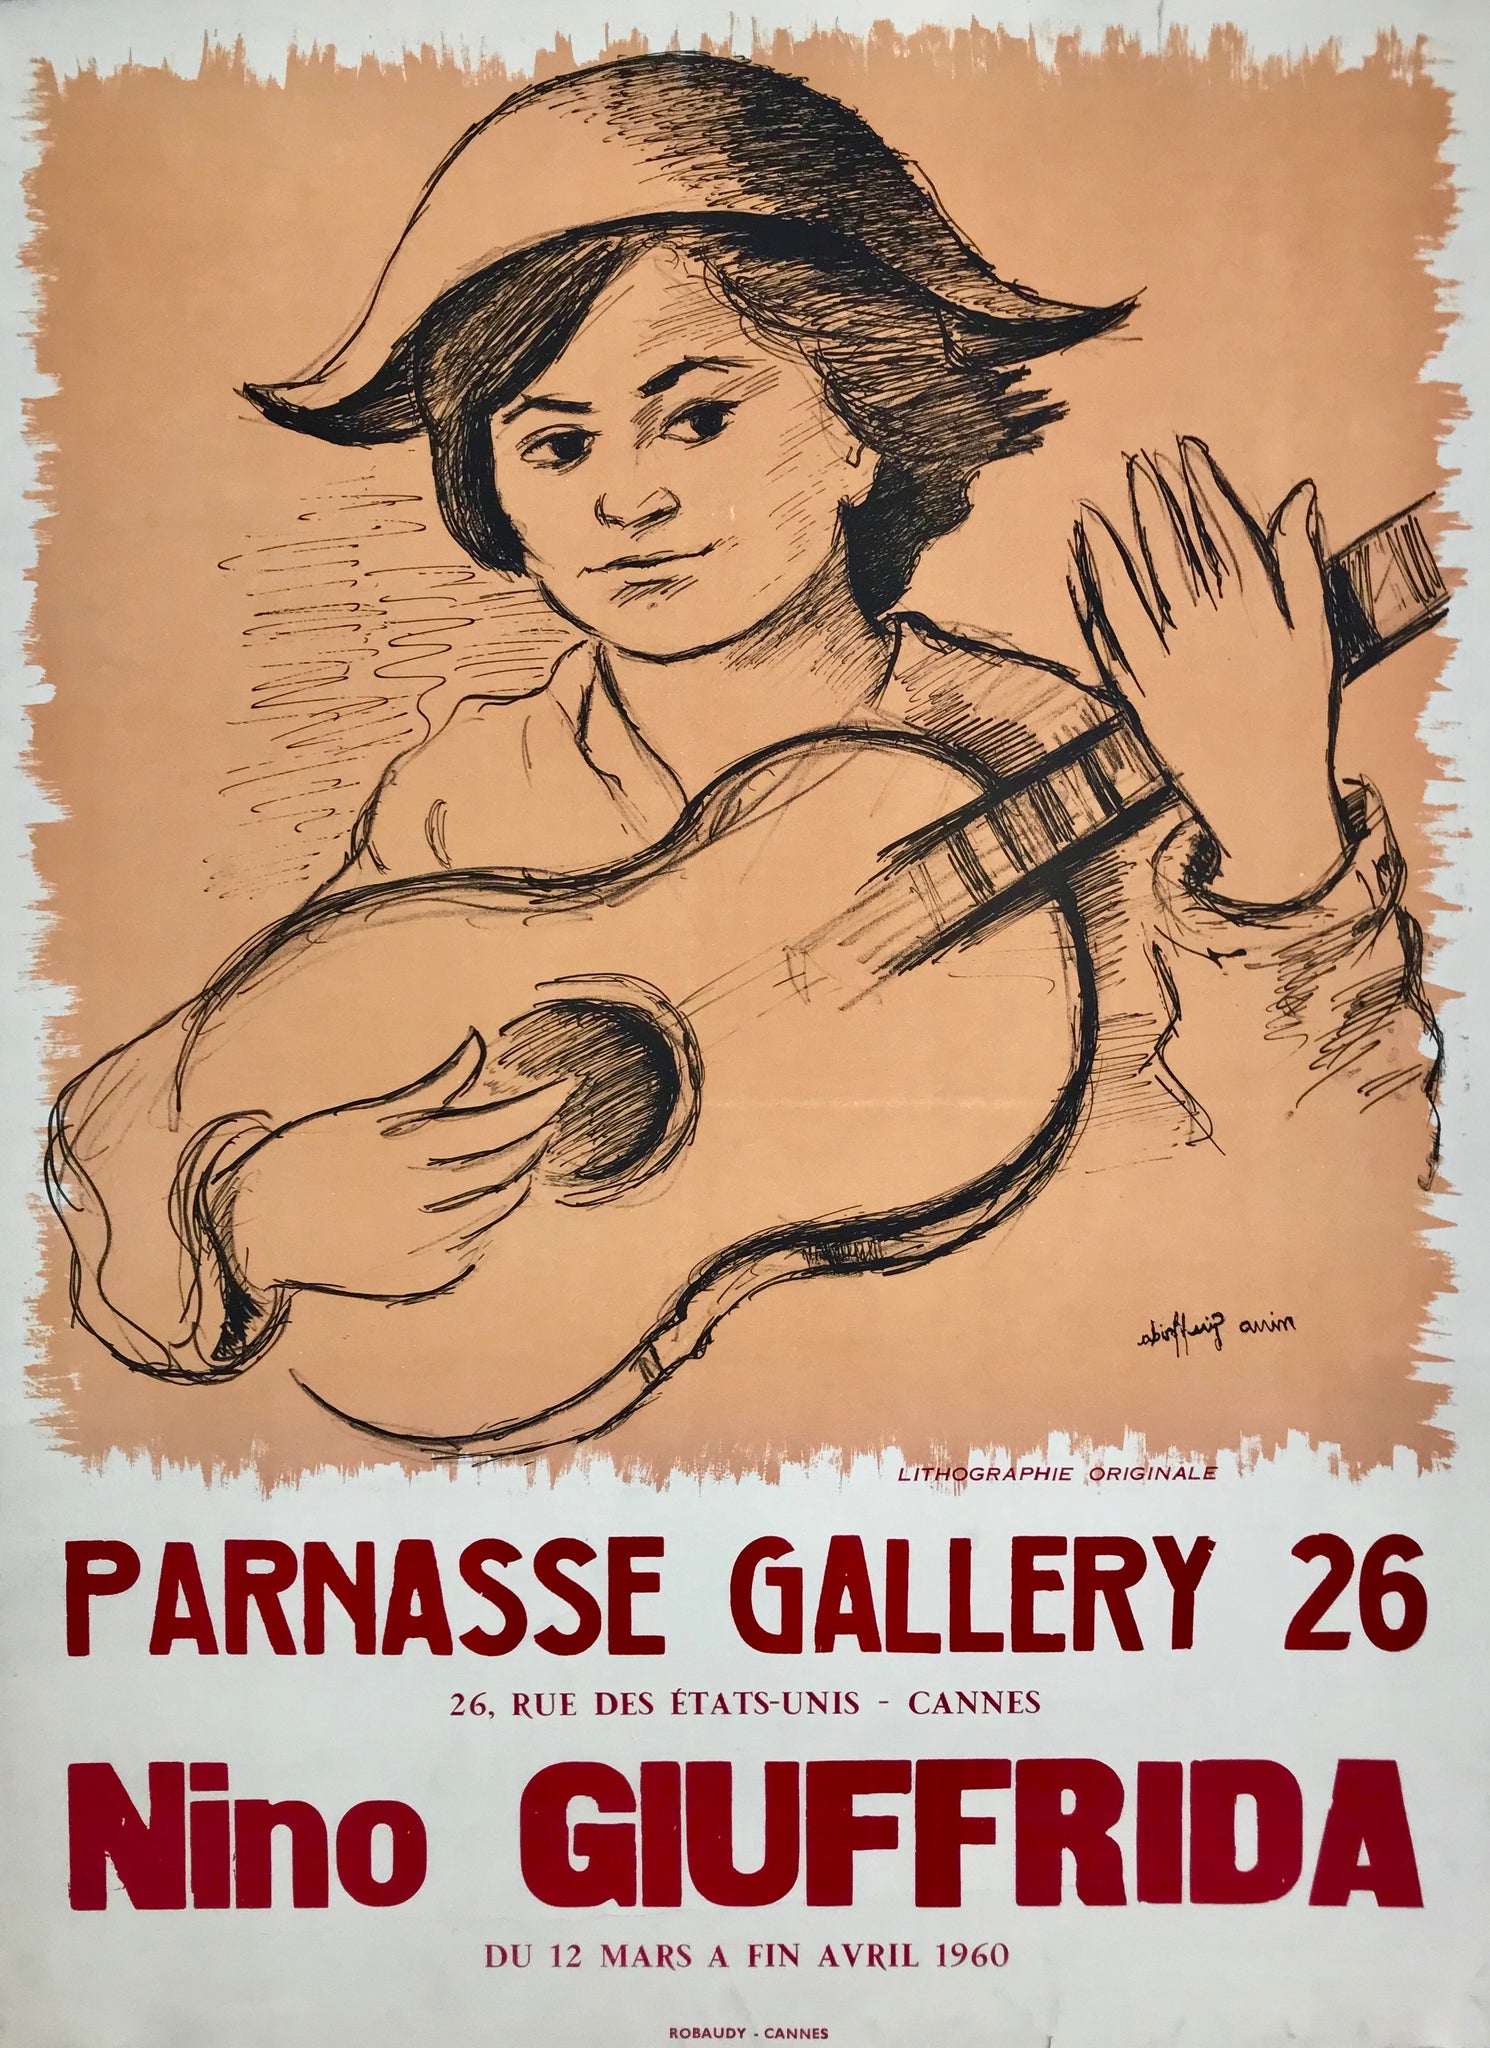 Affiche Ancienne  Parnasse Gallery 26  Par Nino Giuffrida, 1960      Exposition Parnasse Gallery 26, Cannes, 1960.  Portrait d'un guitariste sur fond orange.